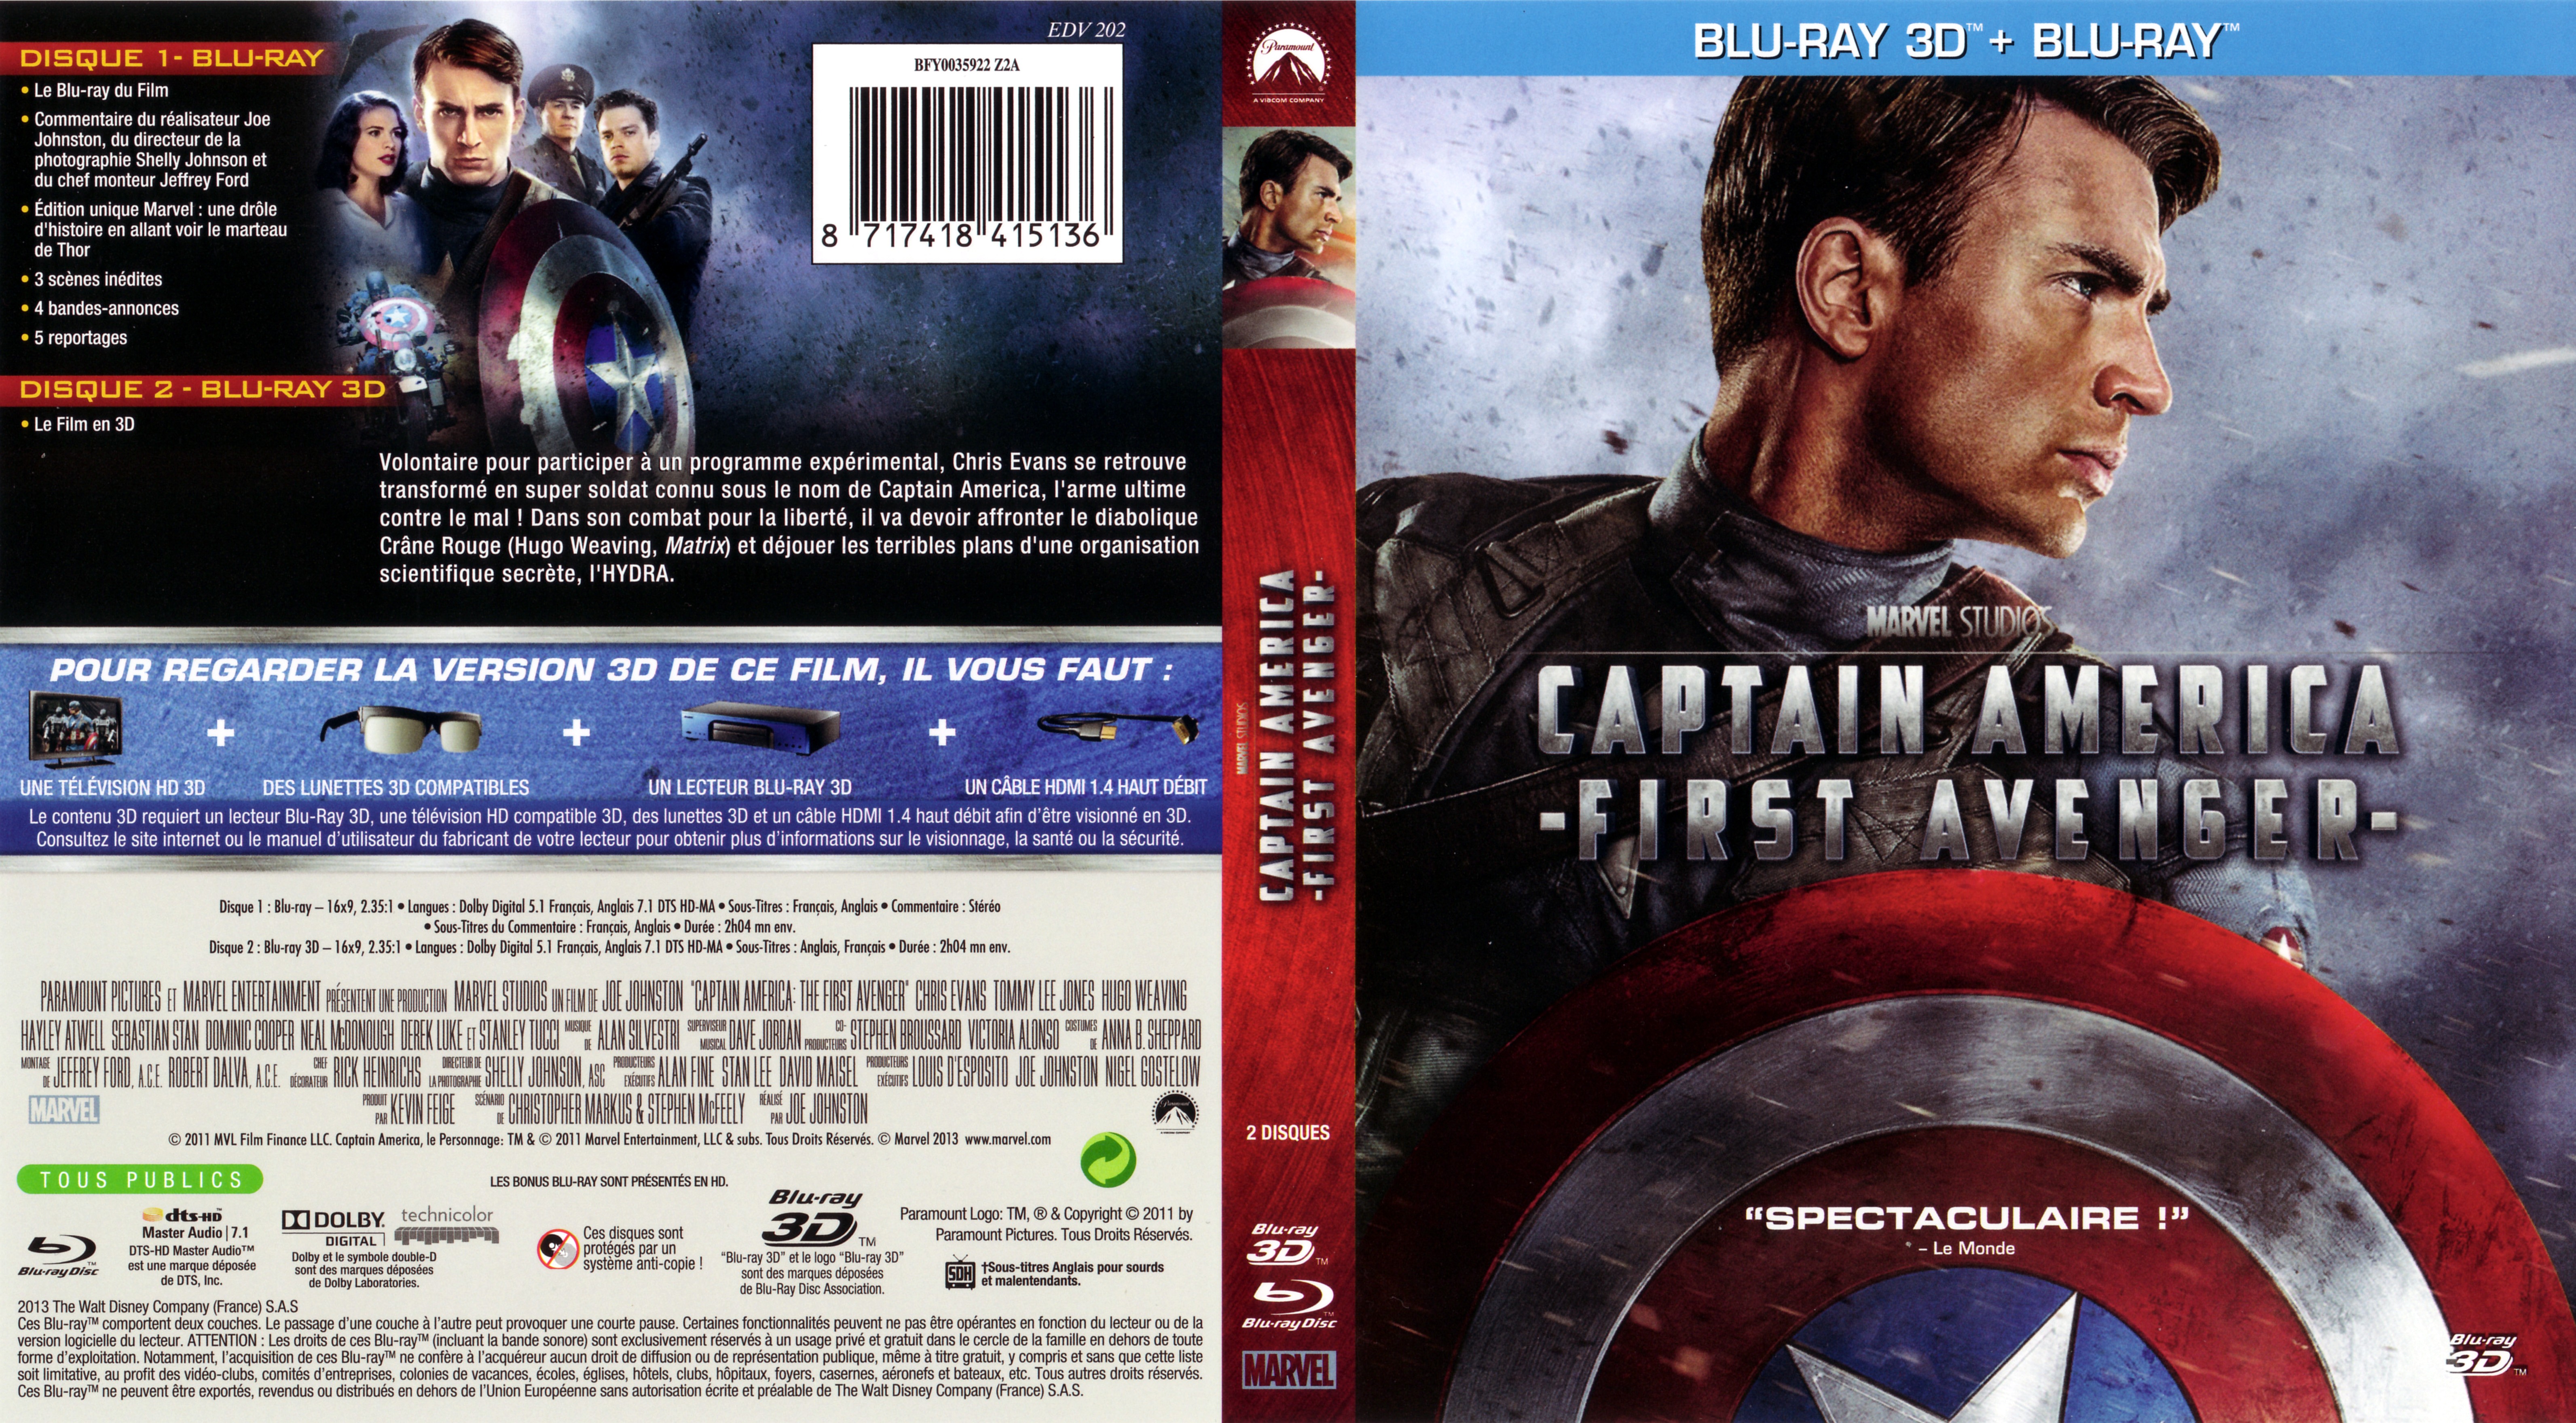 Jaquette DVD Captain America First Avenger 3D (BLU-RAY)